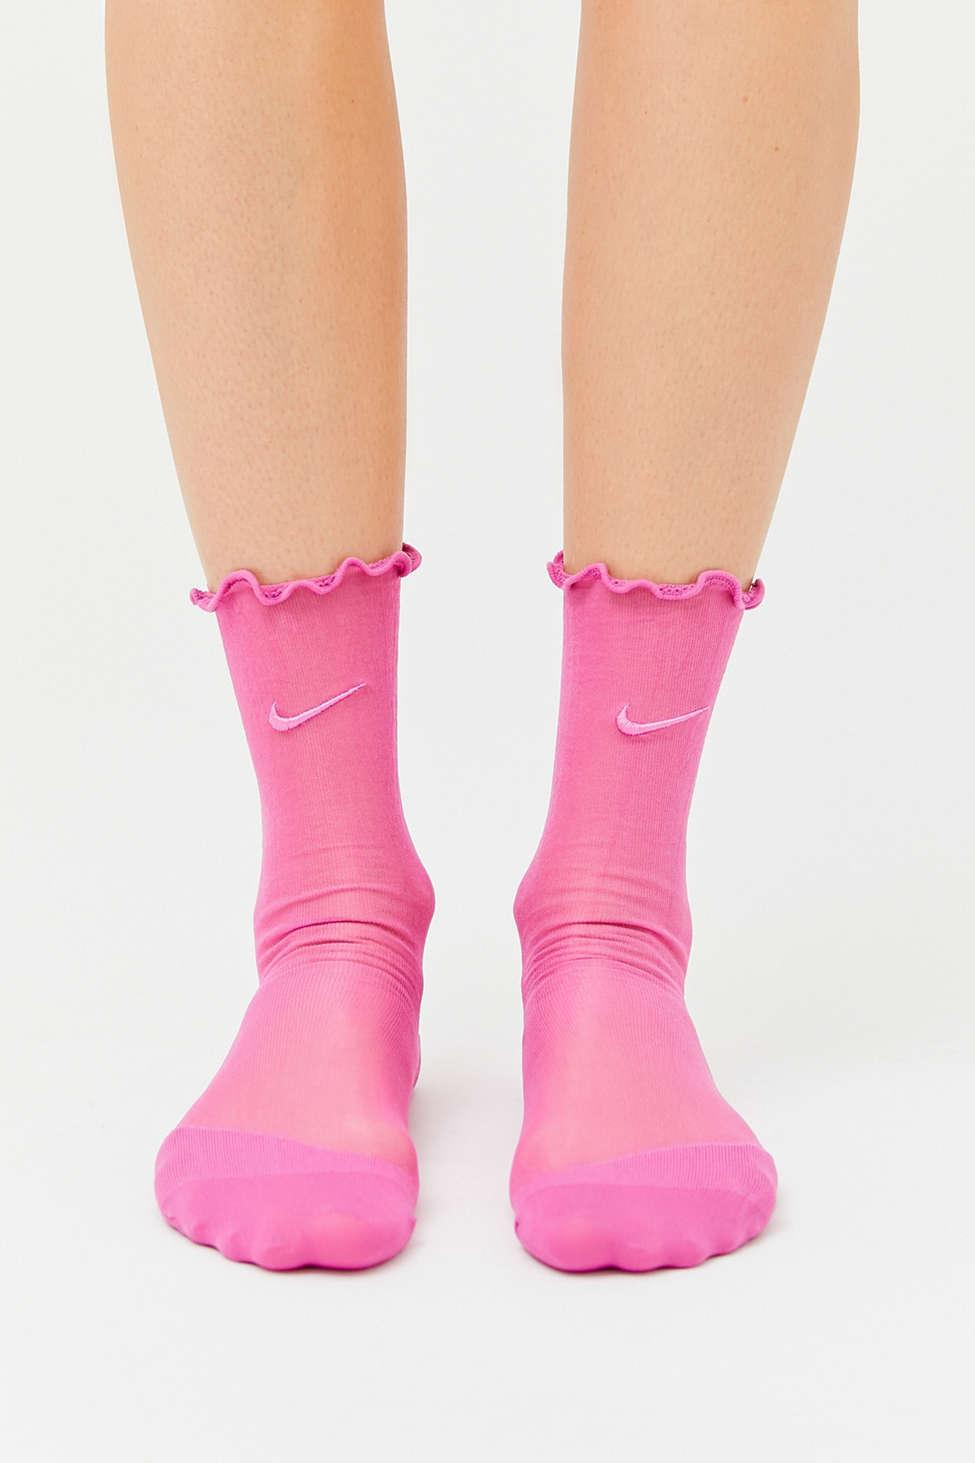 atakan dogan add pink nike ankle socks photo